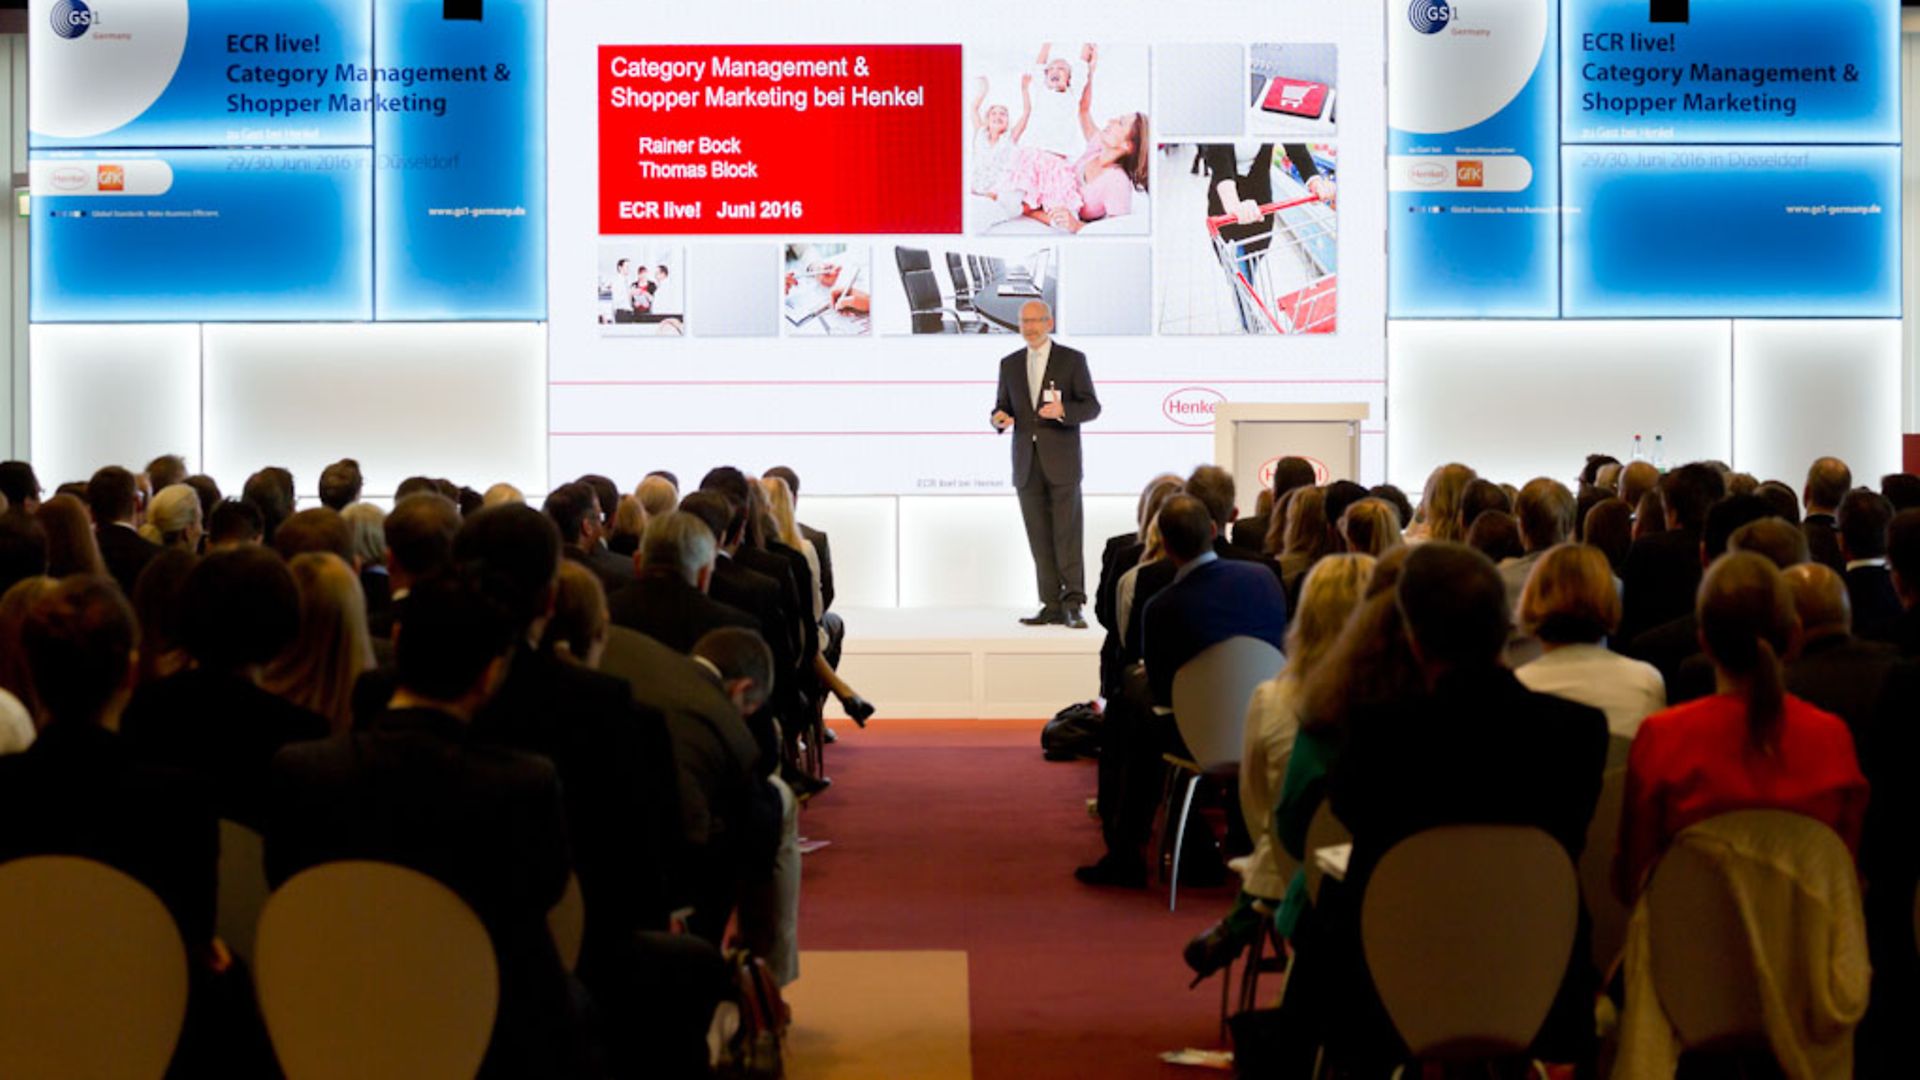 Category Management & Shopper Marketing – darum ging es bei der Konferenz ECR live! 